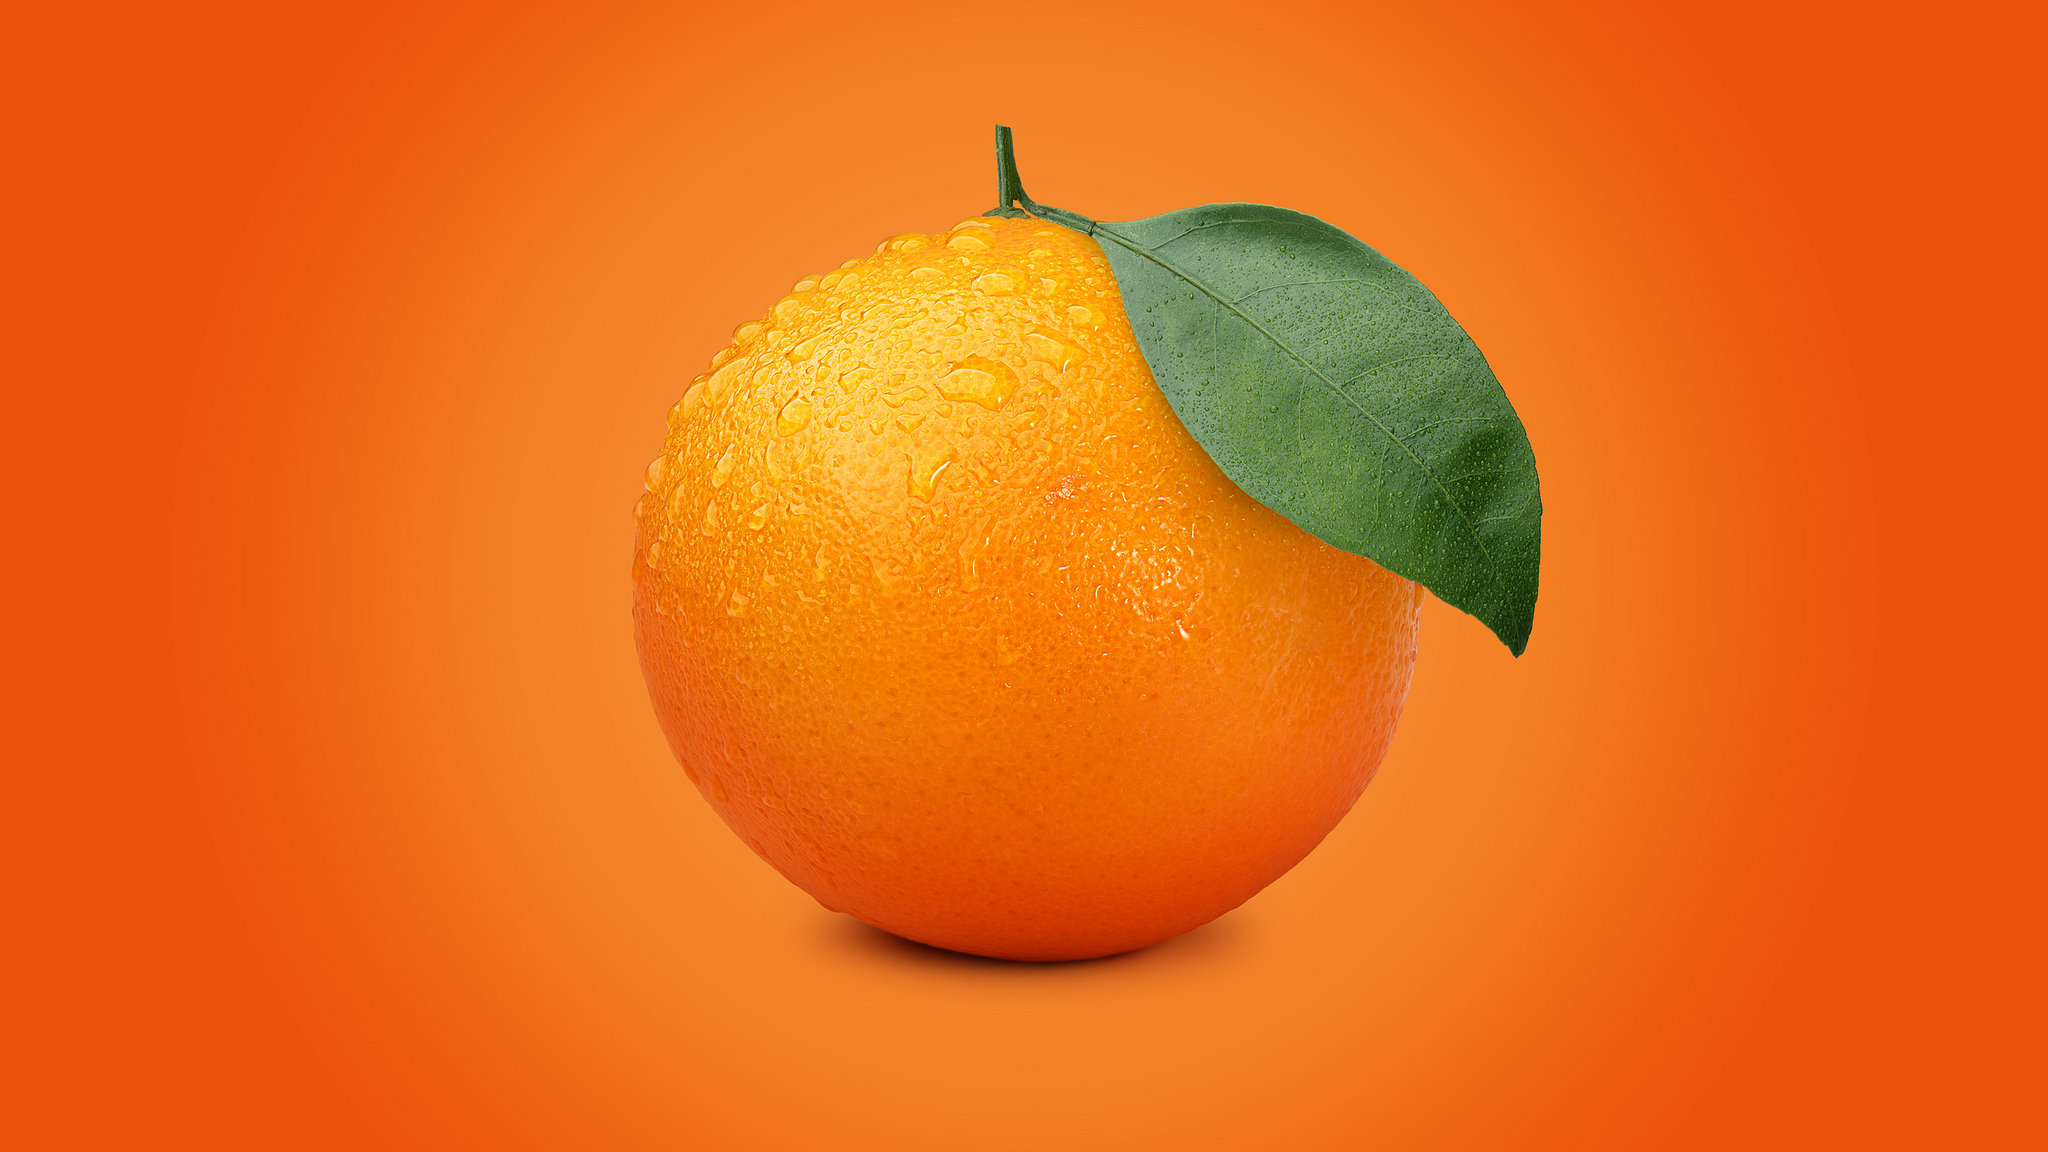 orange color logo design